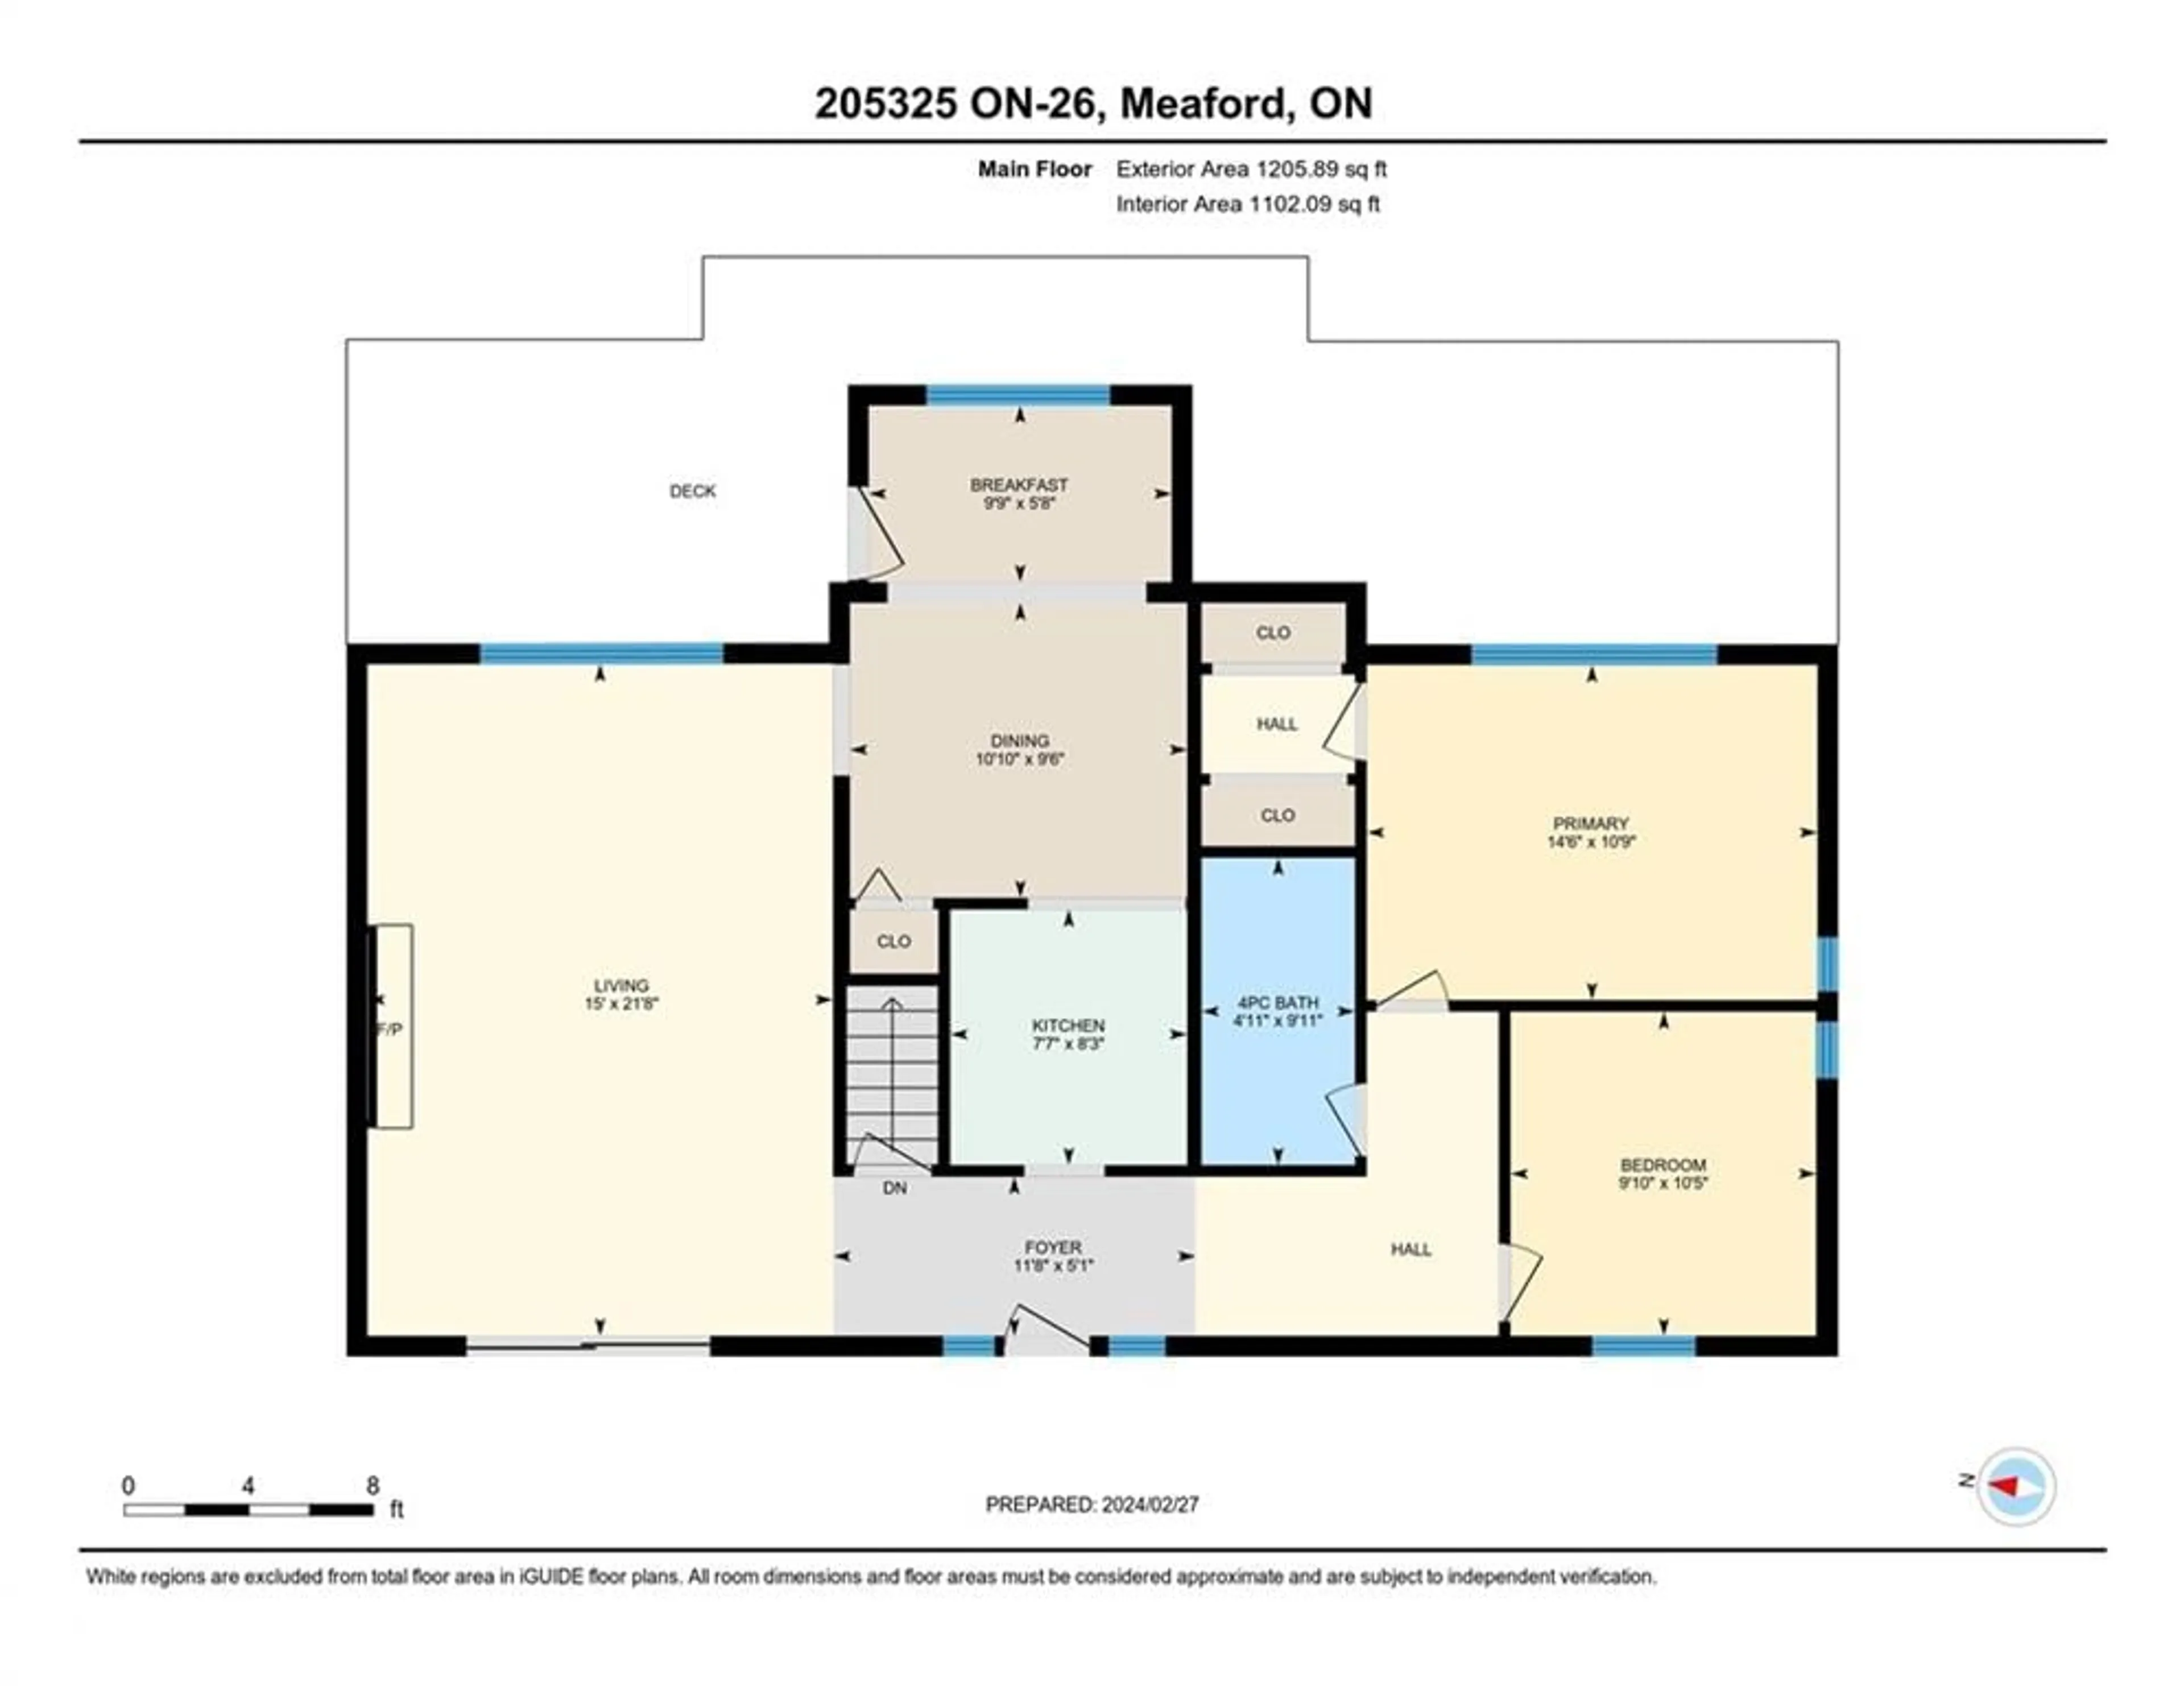 Floor plan for 205325 Highway 26, Meaford Ontario N4L 1W5